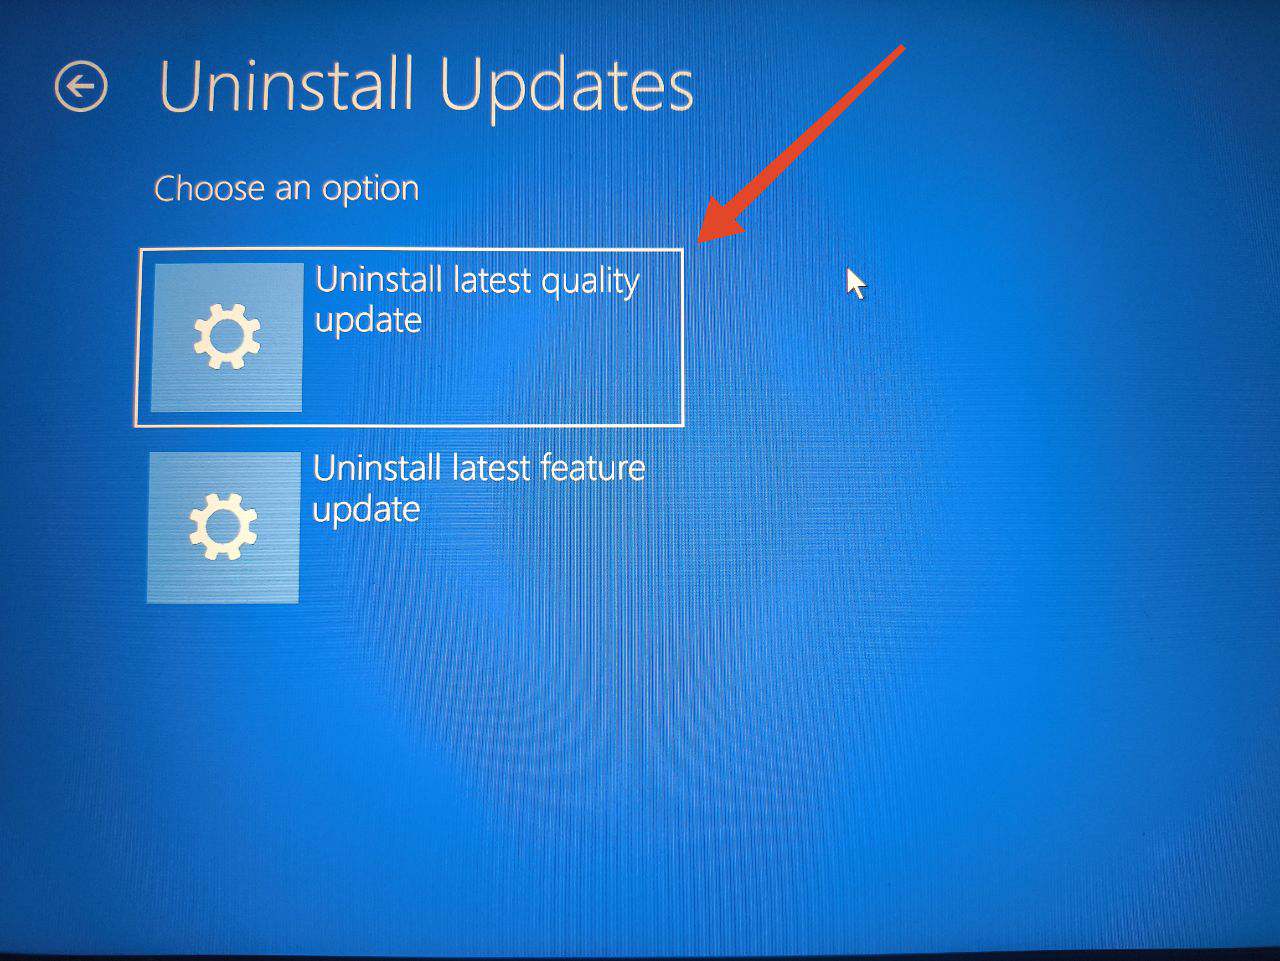 uninstall latest quality update